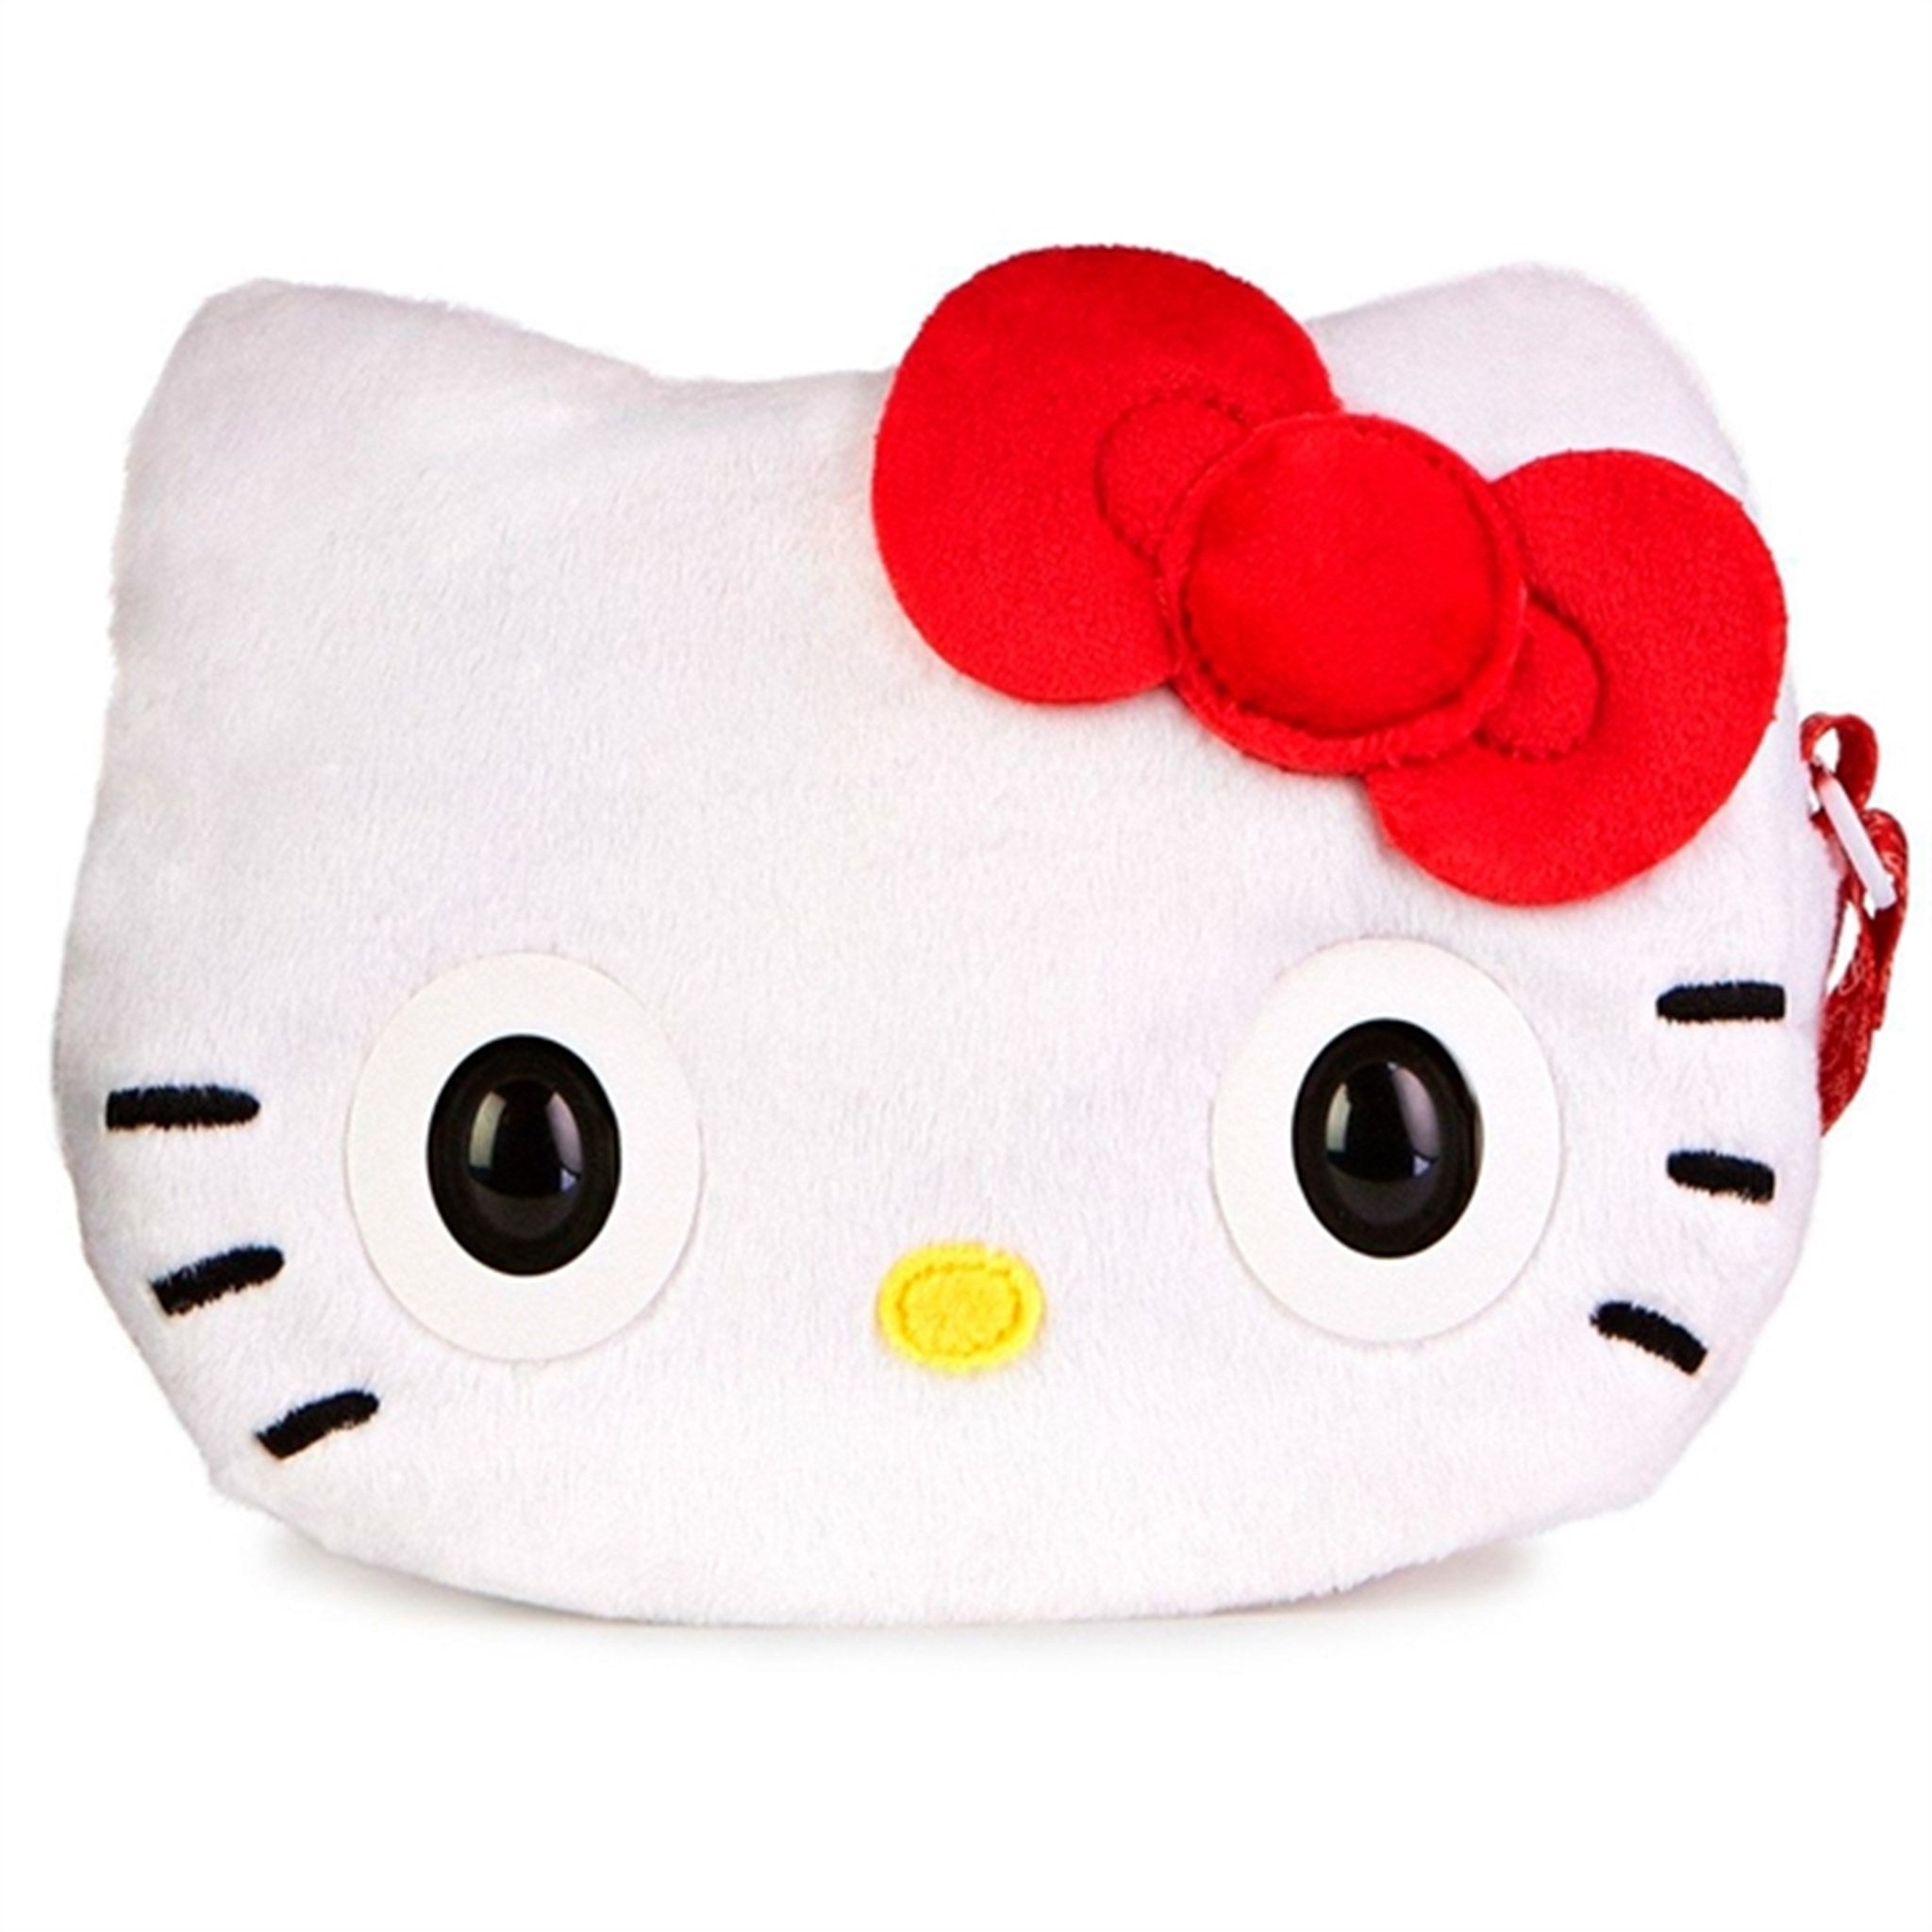 Purse Pets Sanrio Bag Hello Kitty